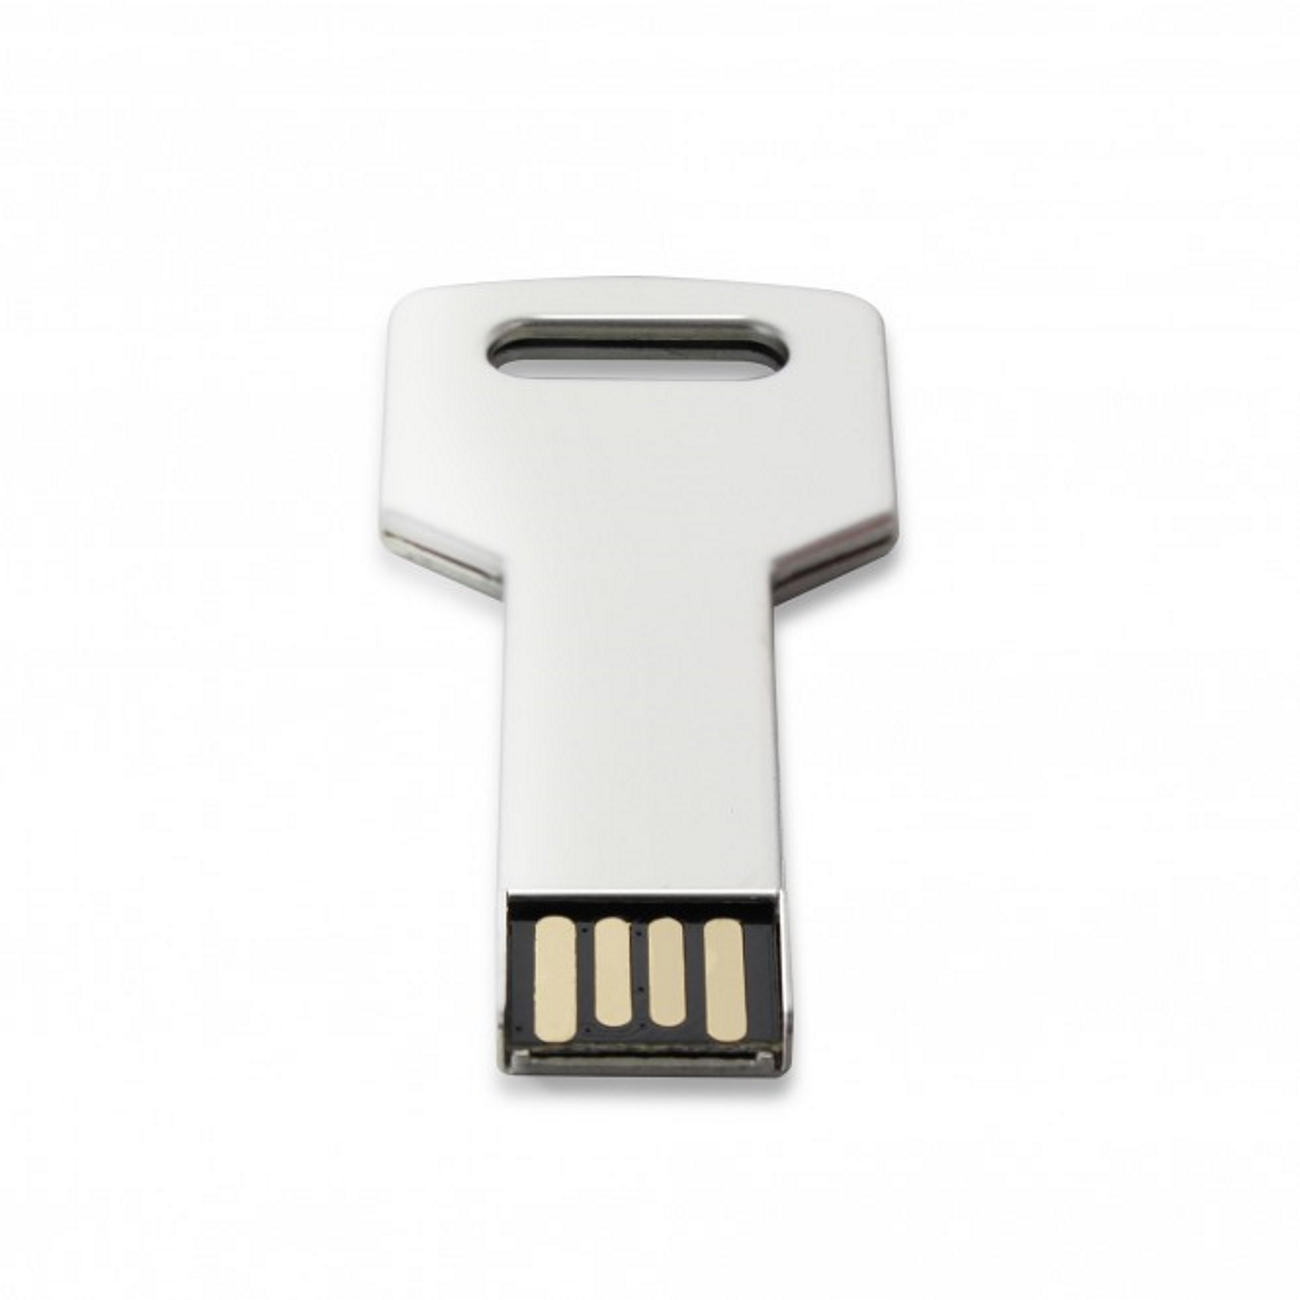 128 GERMANY GB) Key USB ®Schlüssel (Silber, USB-Stick